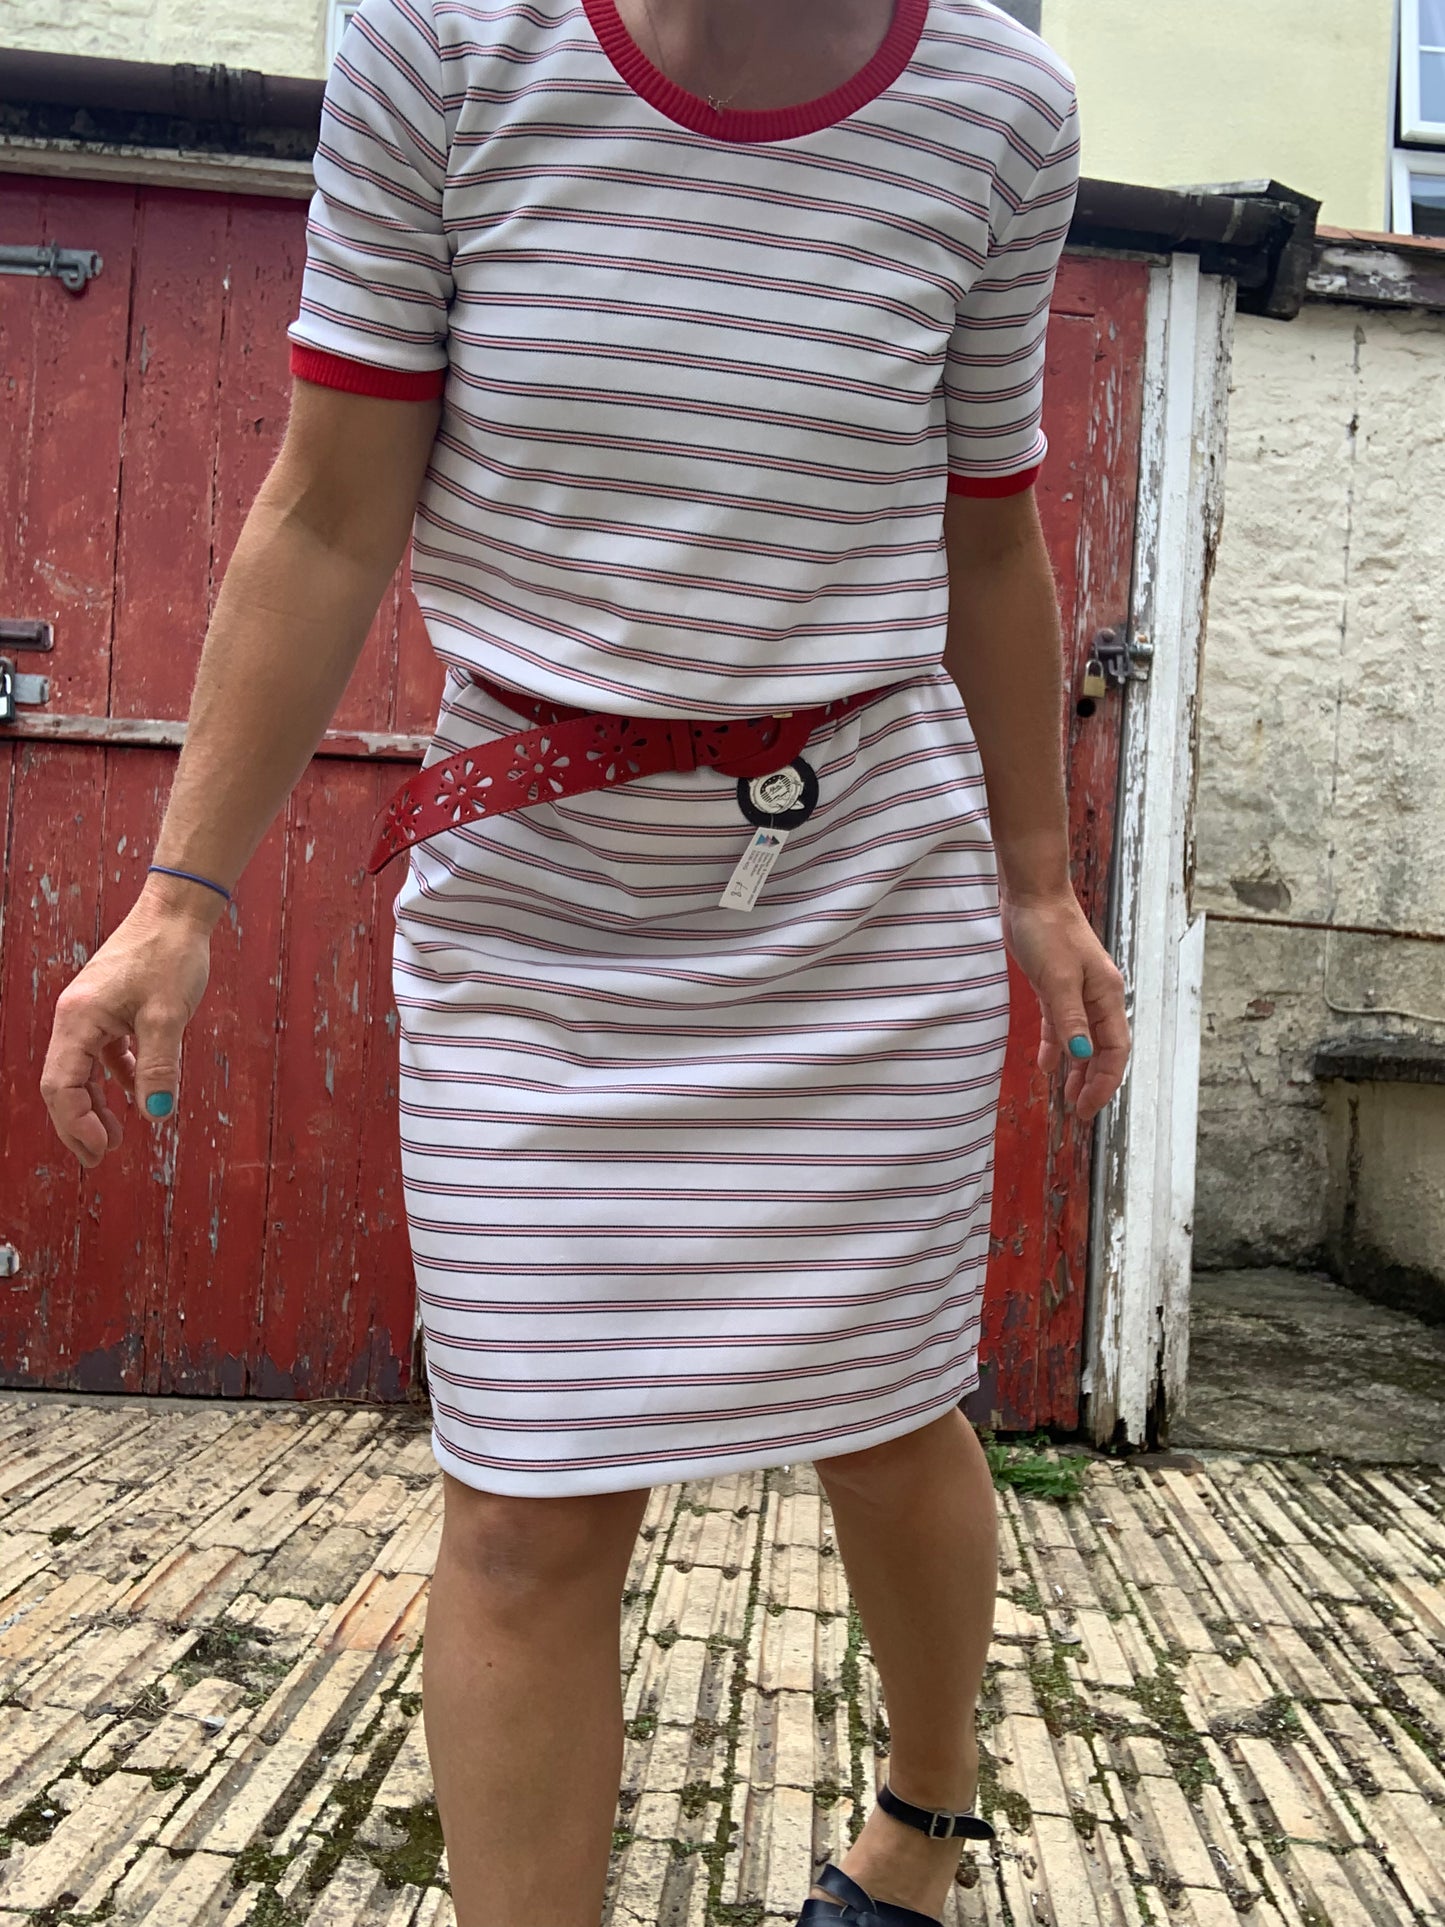 Vintage 1970’s striped jersey dress